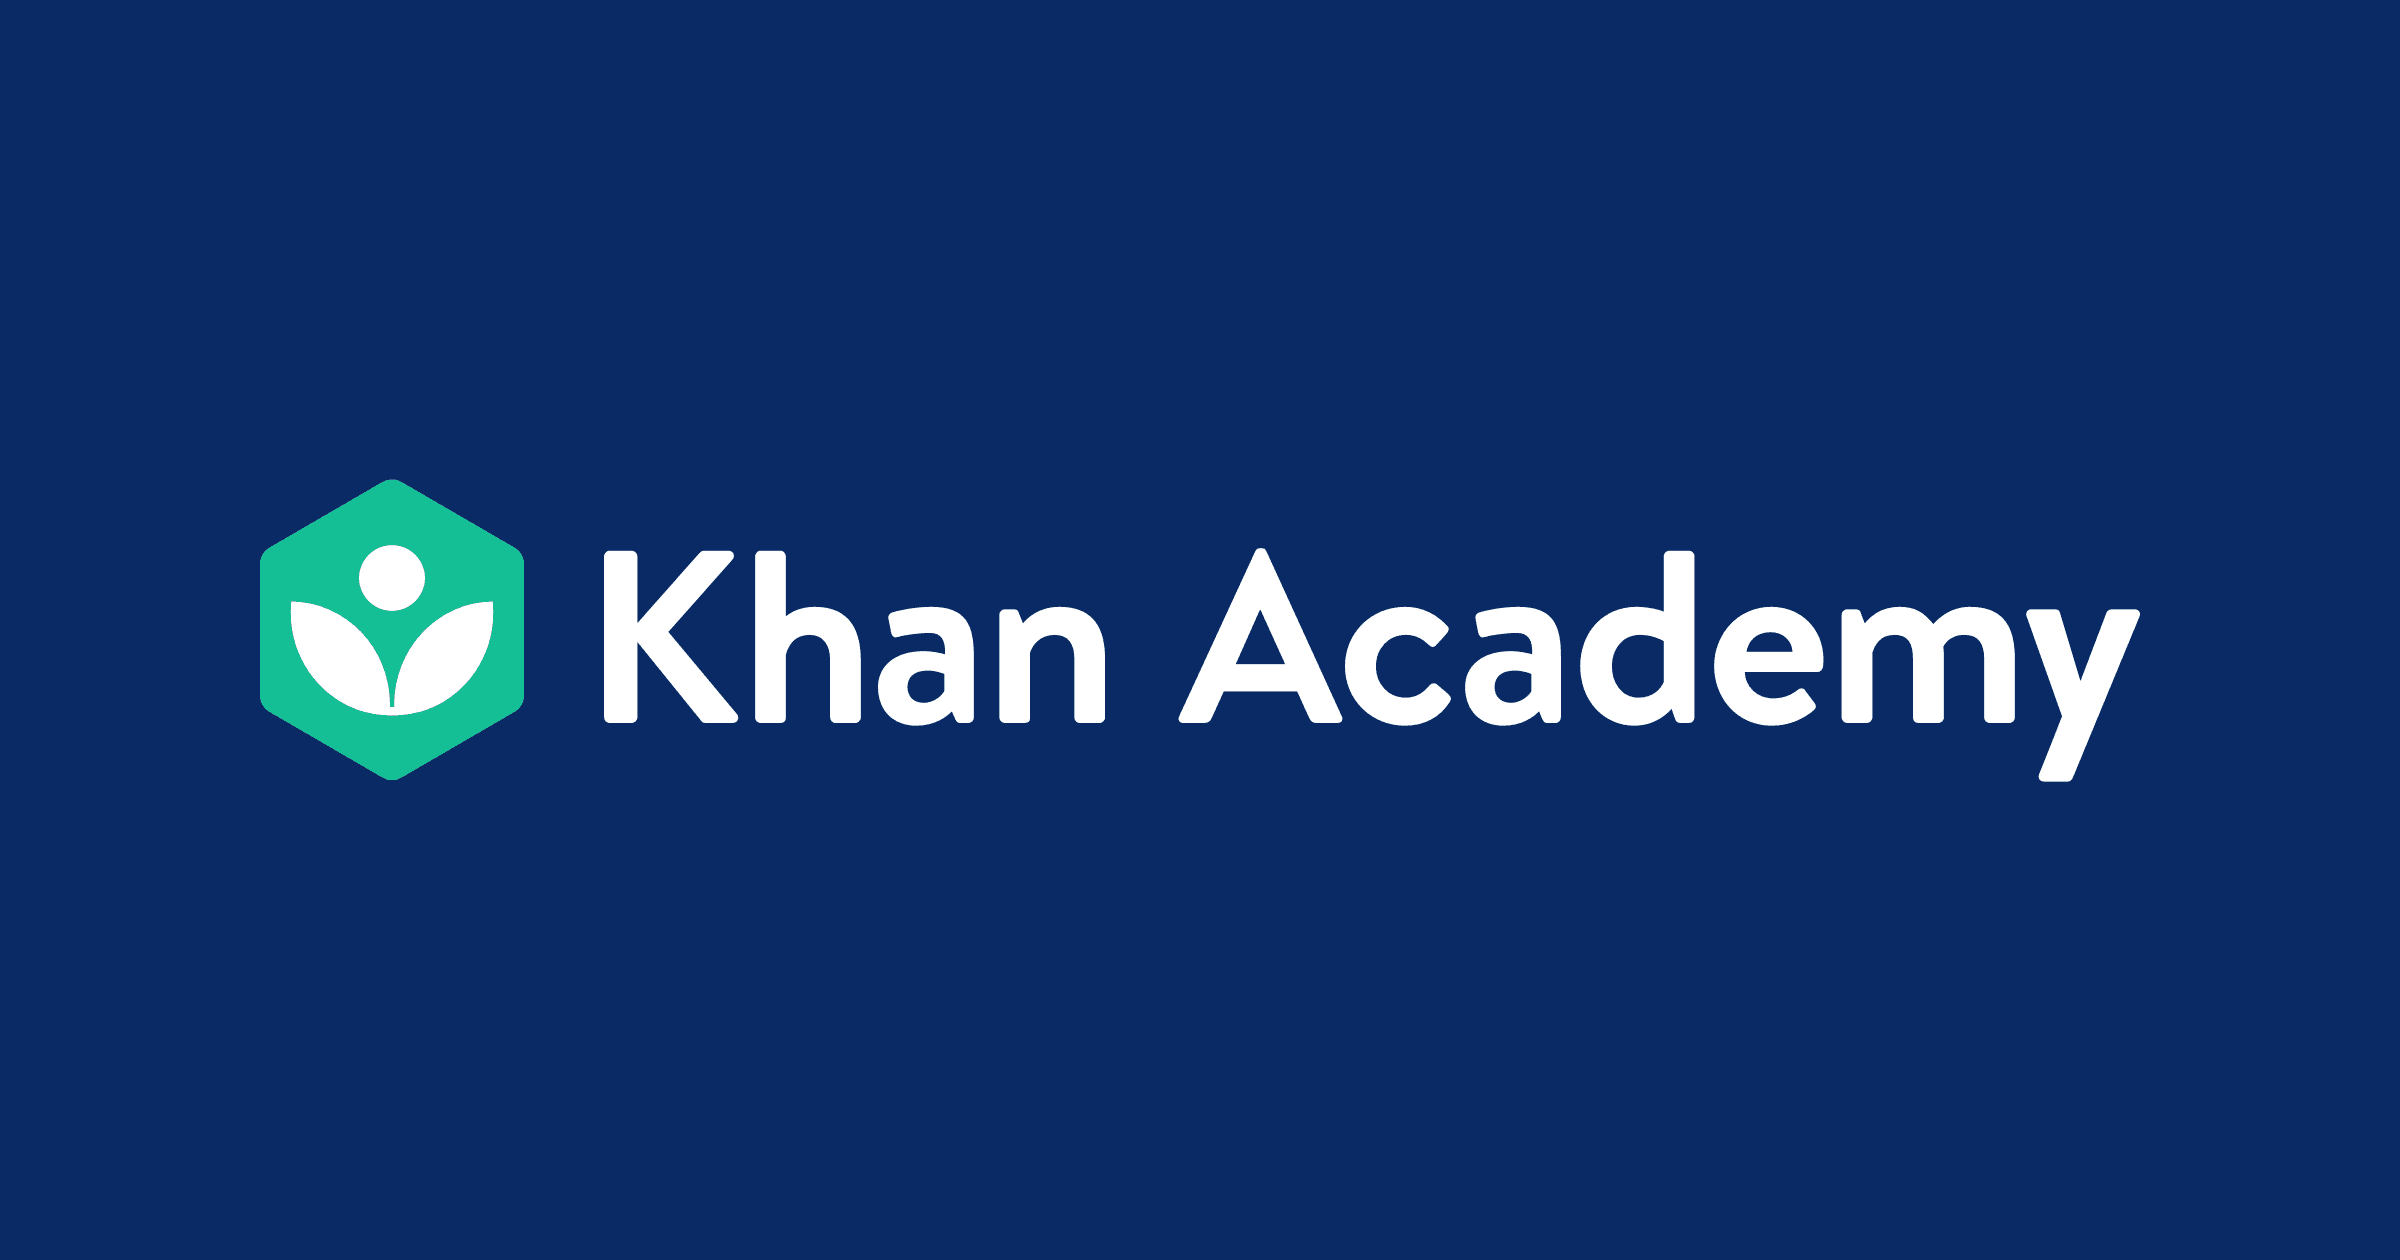 khan-logo-dark-background.new